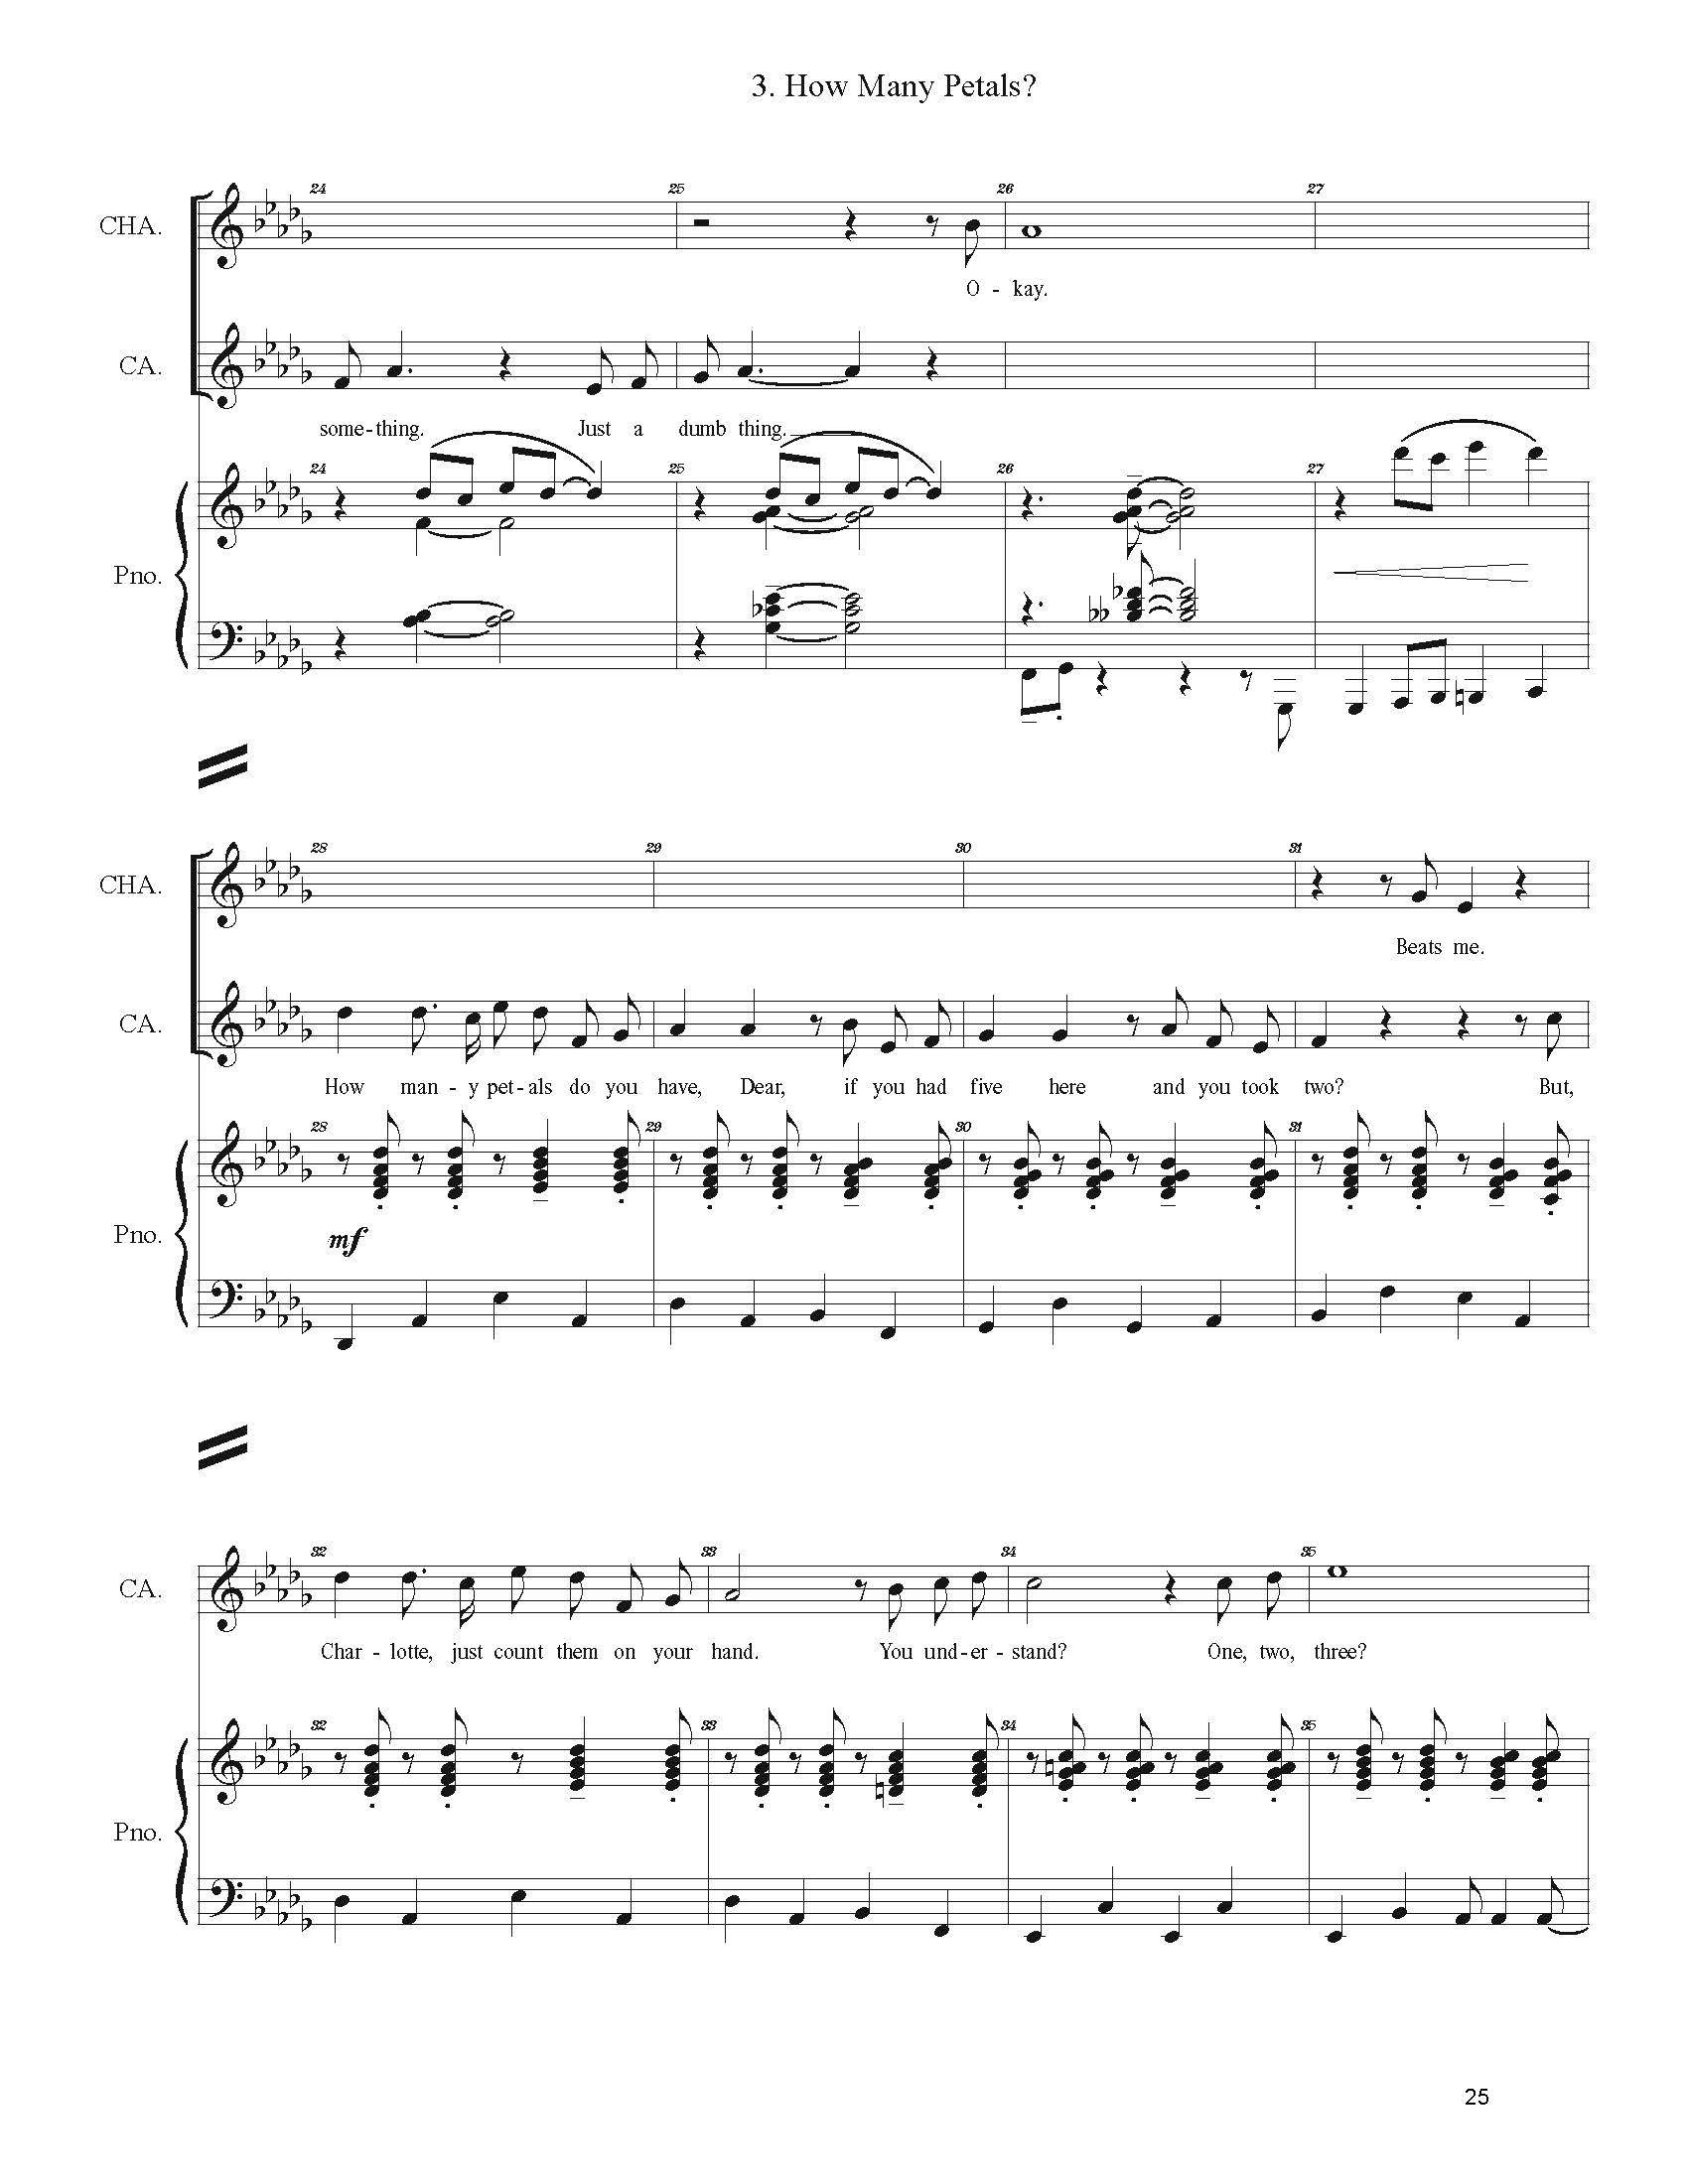 FULL PIANO VOCAL SCORE DRAFT 1 - Score_Page_025.jpg